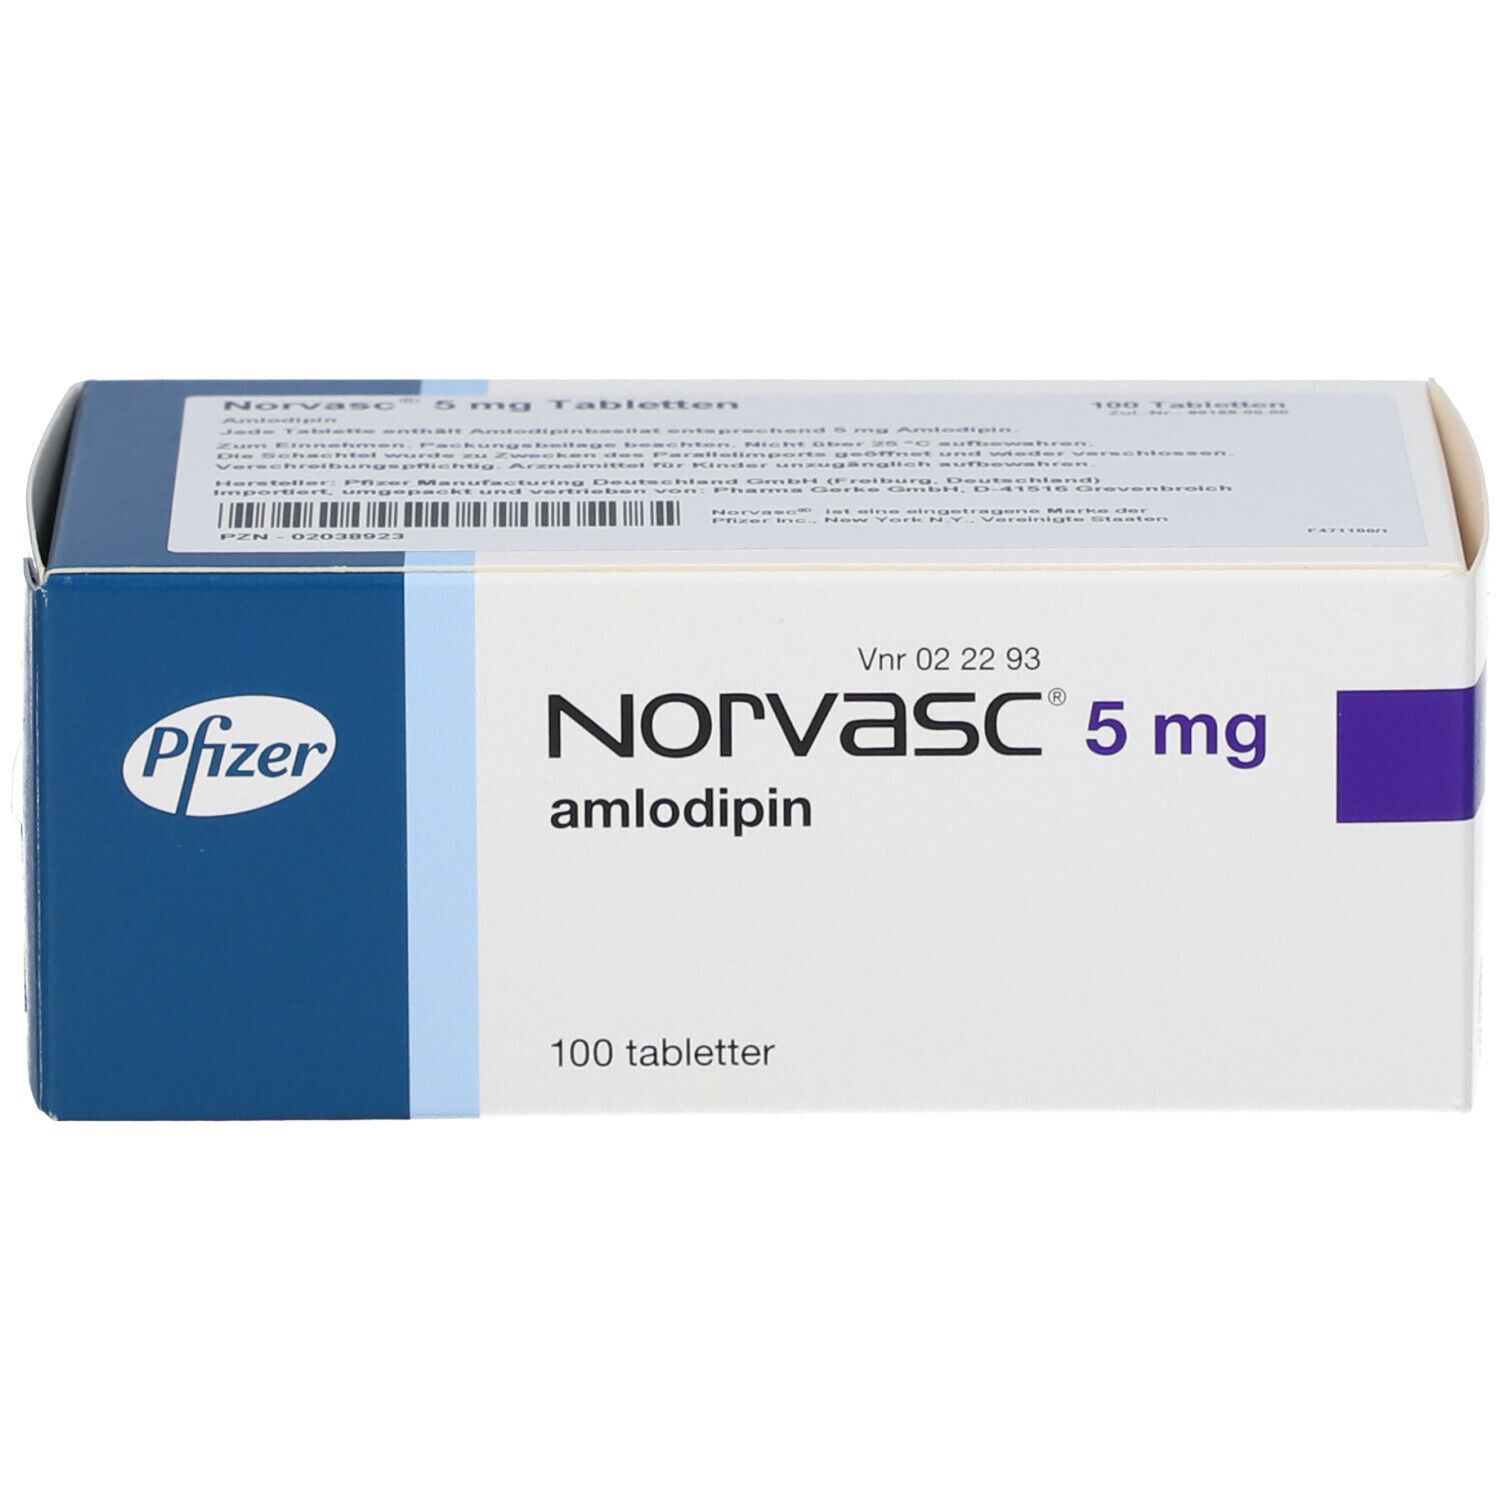 Norvasc 5 mg